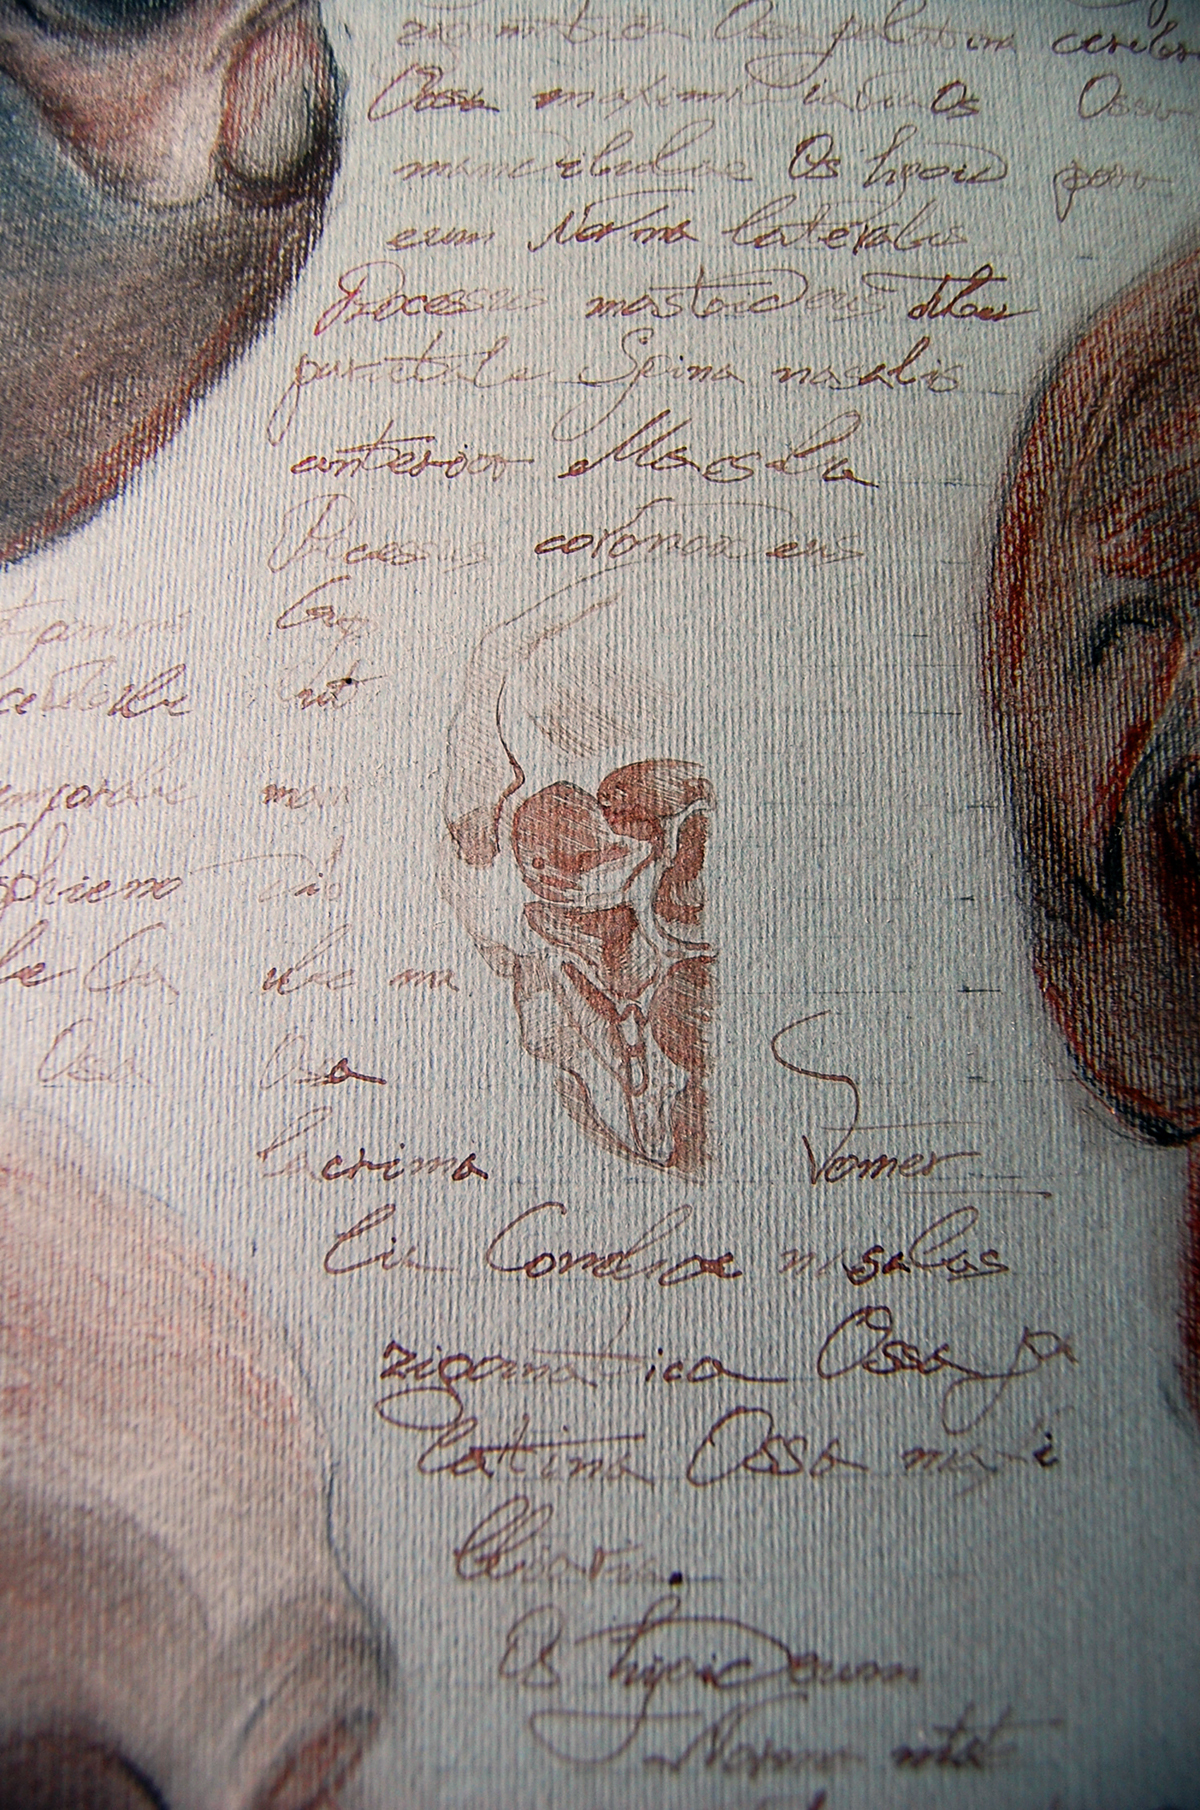 skull anatomy ink baby leonardo da vinci